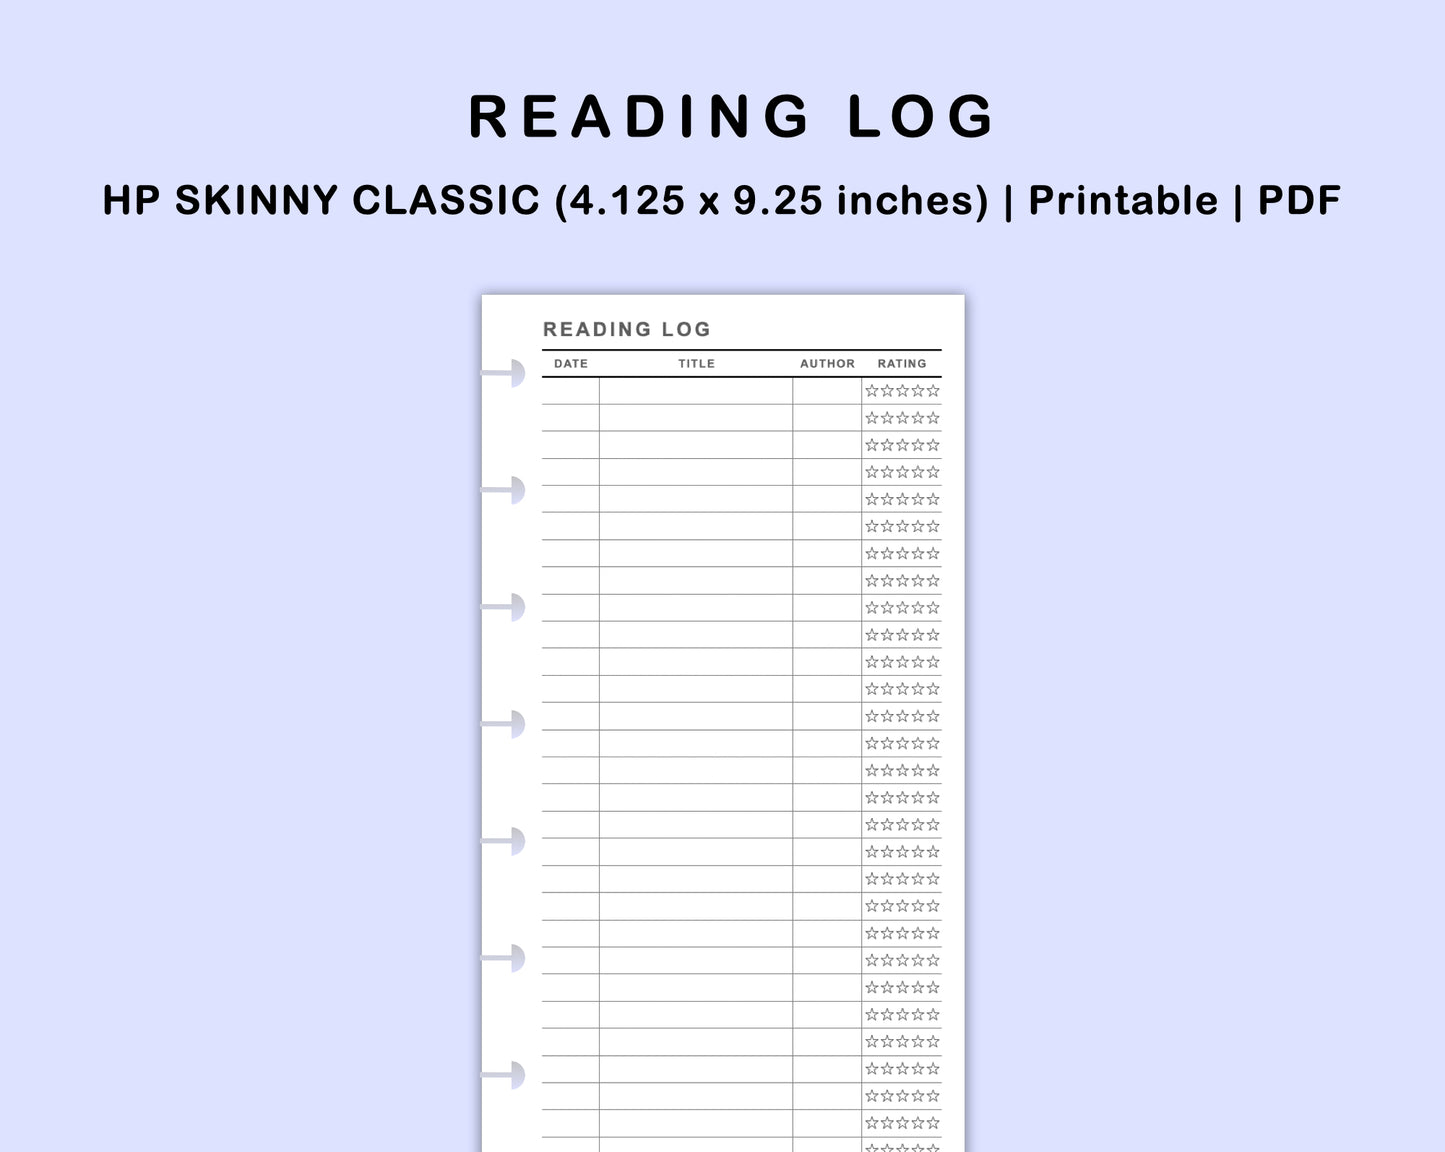 Skinny Classic HP Inserts - Reading Log